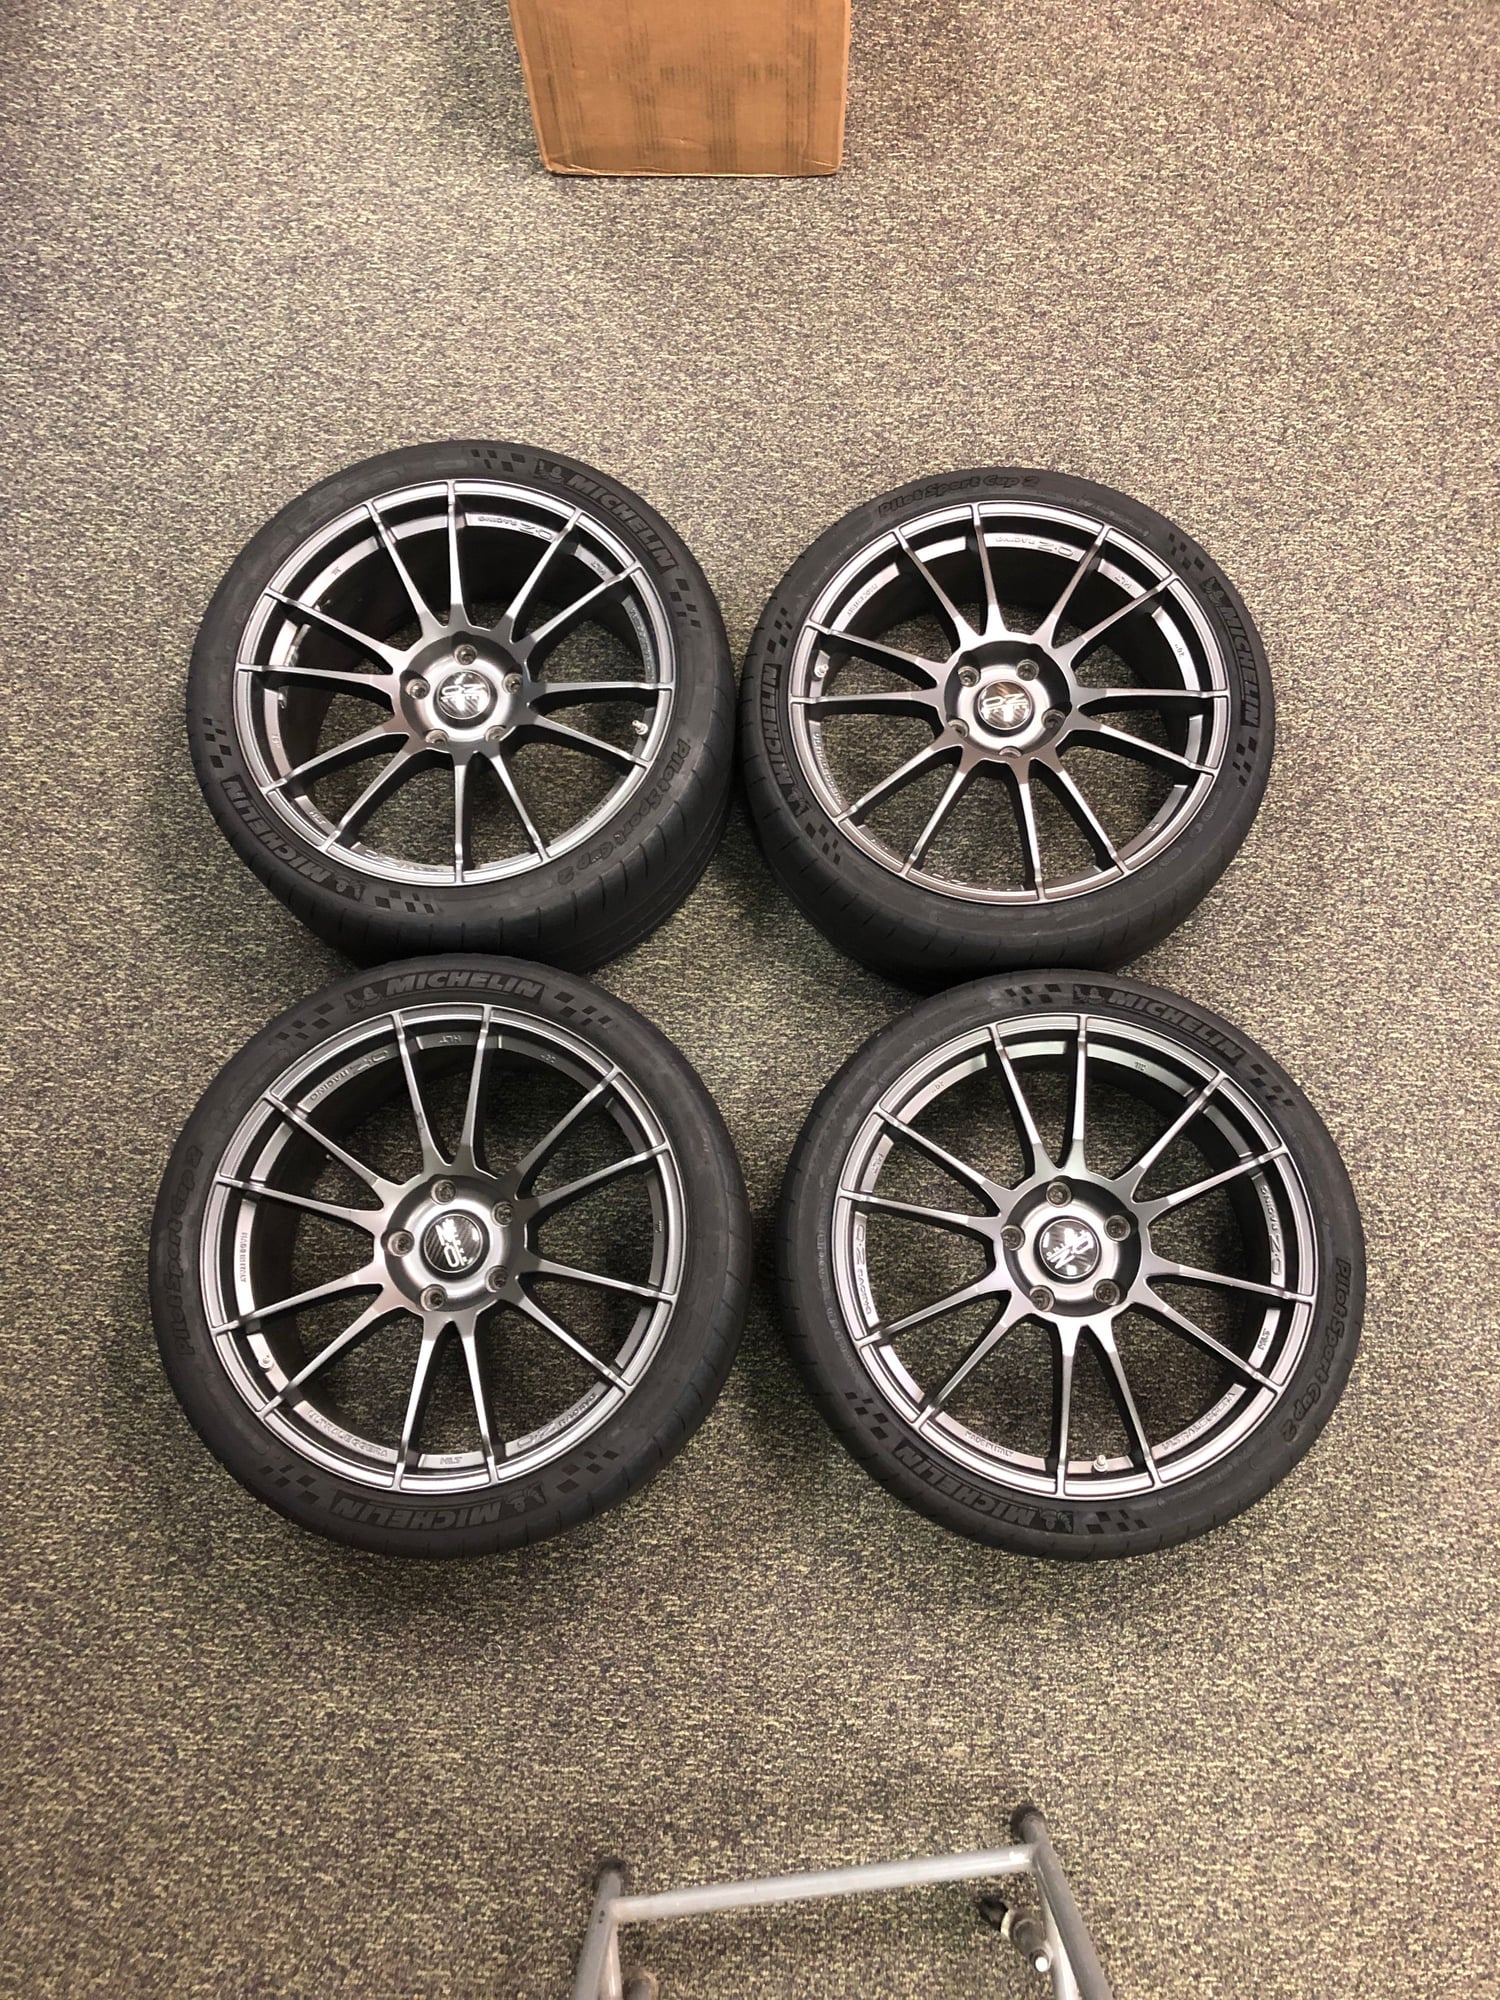 Wheels and Tires/Axles - OZ Ultraleggerra HLT- 20"- Matte Graphite Silver Front and Rear Wheels - Used - Atlanta, GA 30327, United States